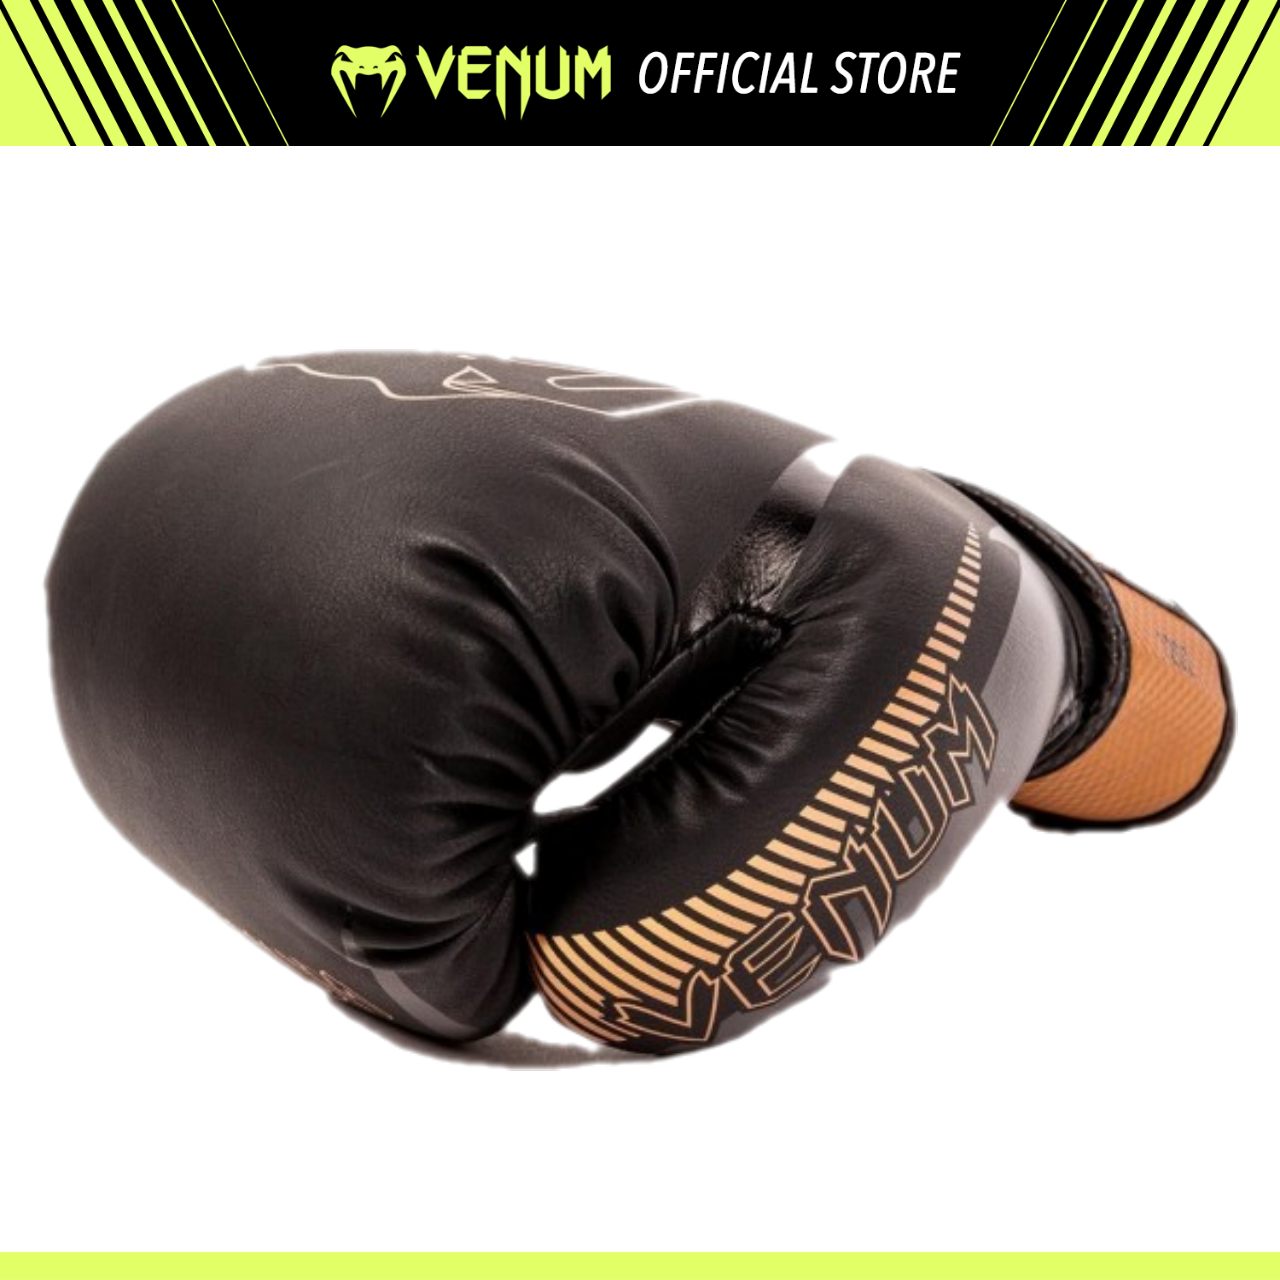 Venum Impact Boxing Gloves - Black/Bronze Black/Bronze / 10 oz